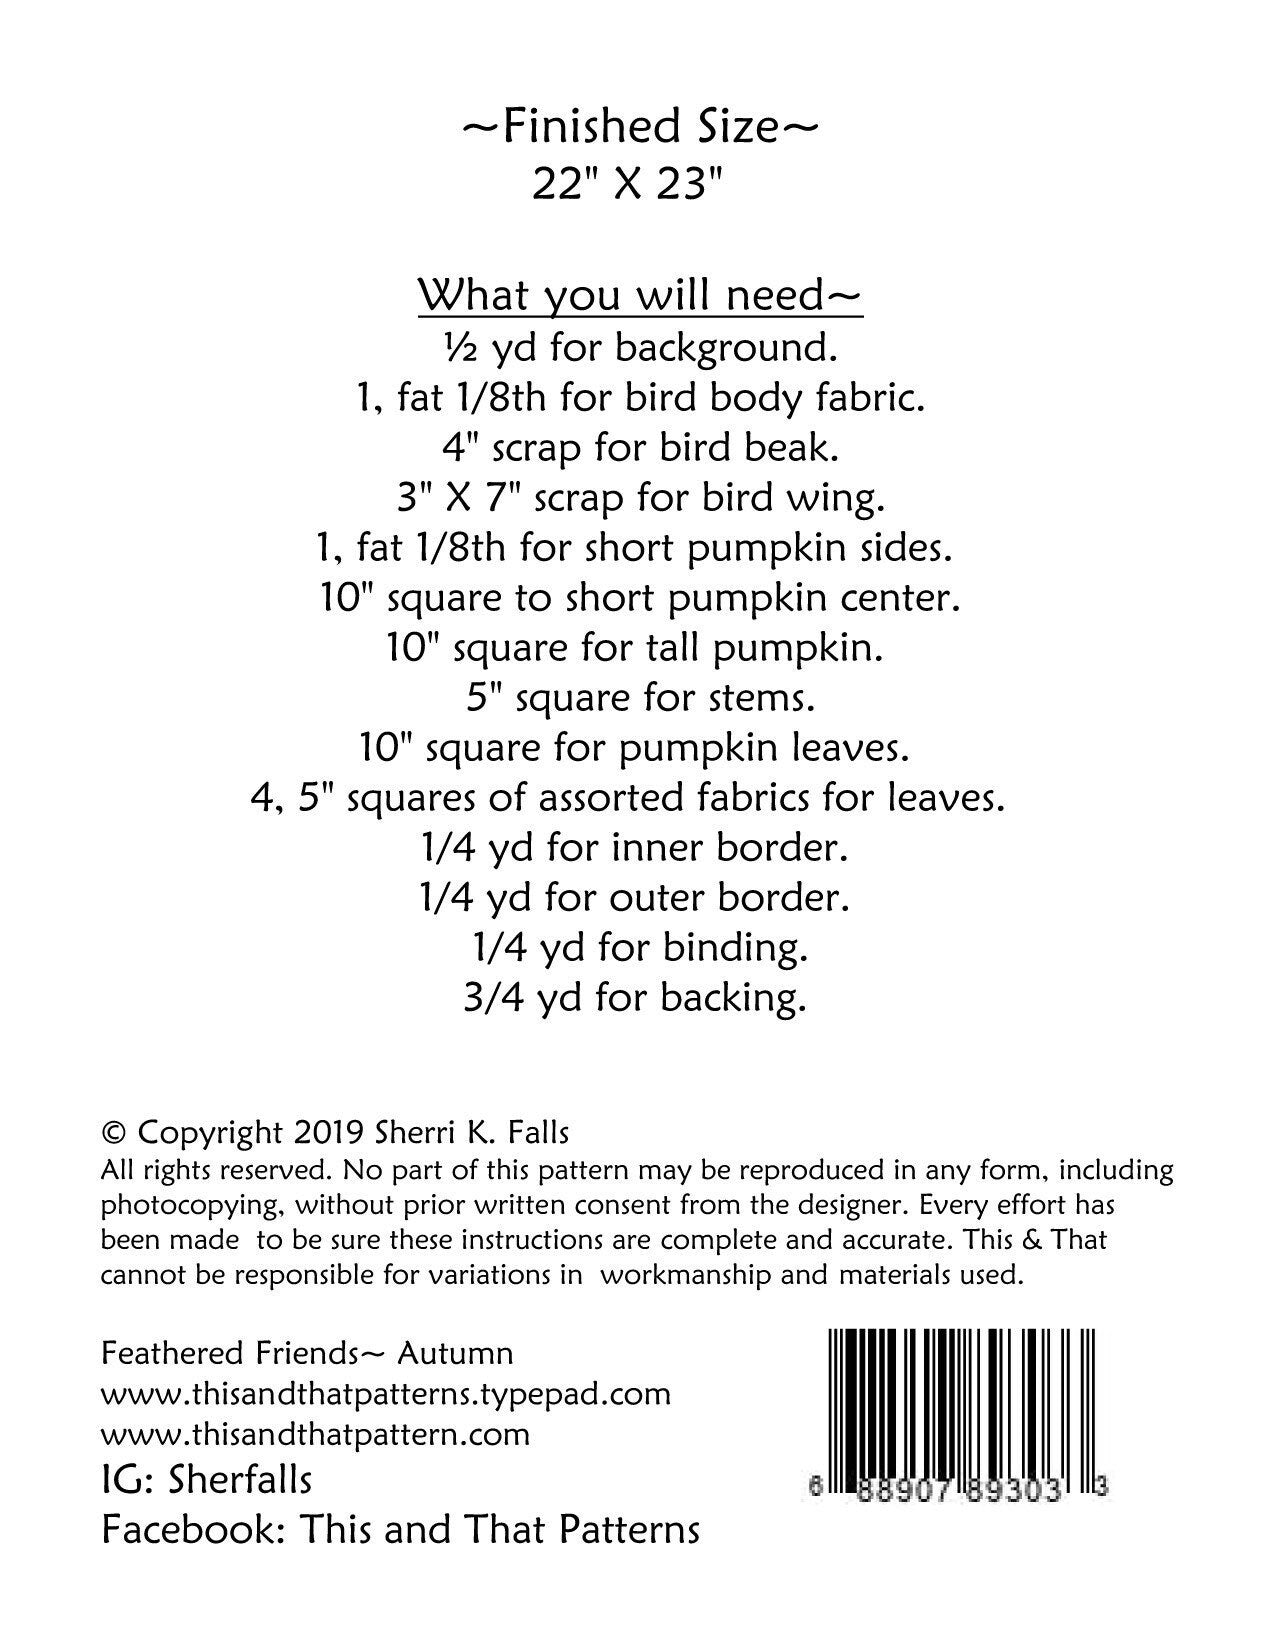 Feathered Friends Autumn Mini Quilt Pattern - This & That - Sherri Falls